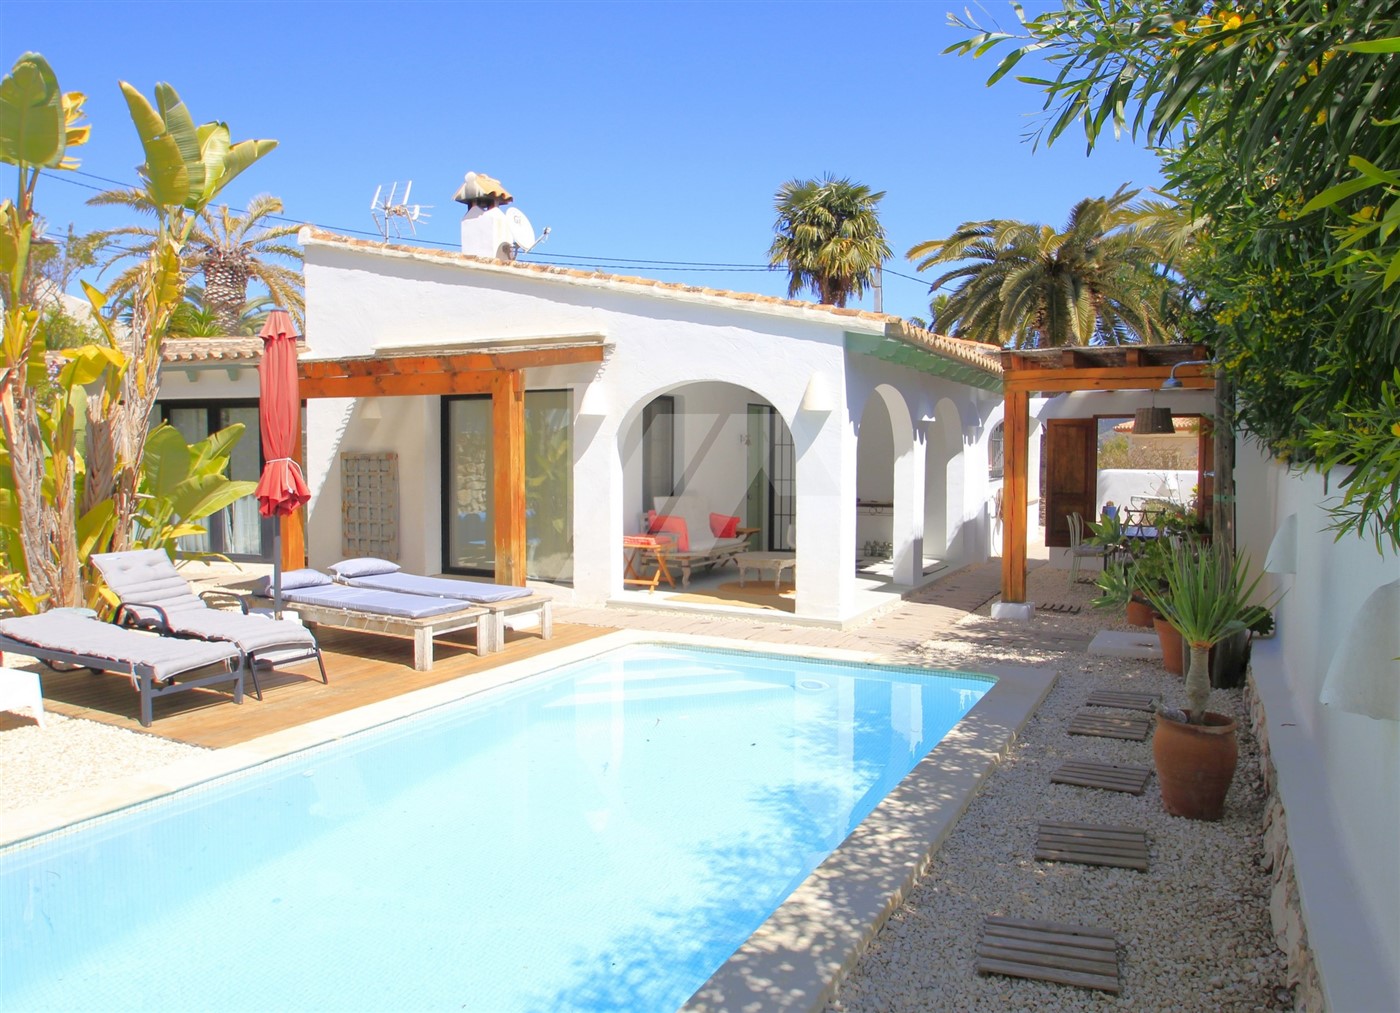 Ibizan style villa for sale in Moraira, Costa Blanca, Spain.